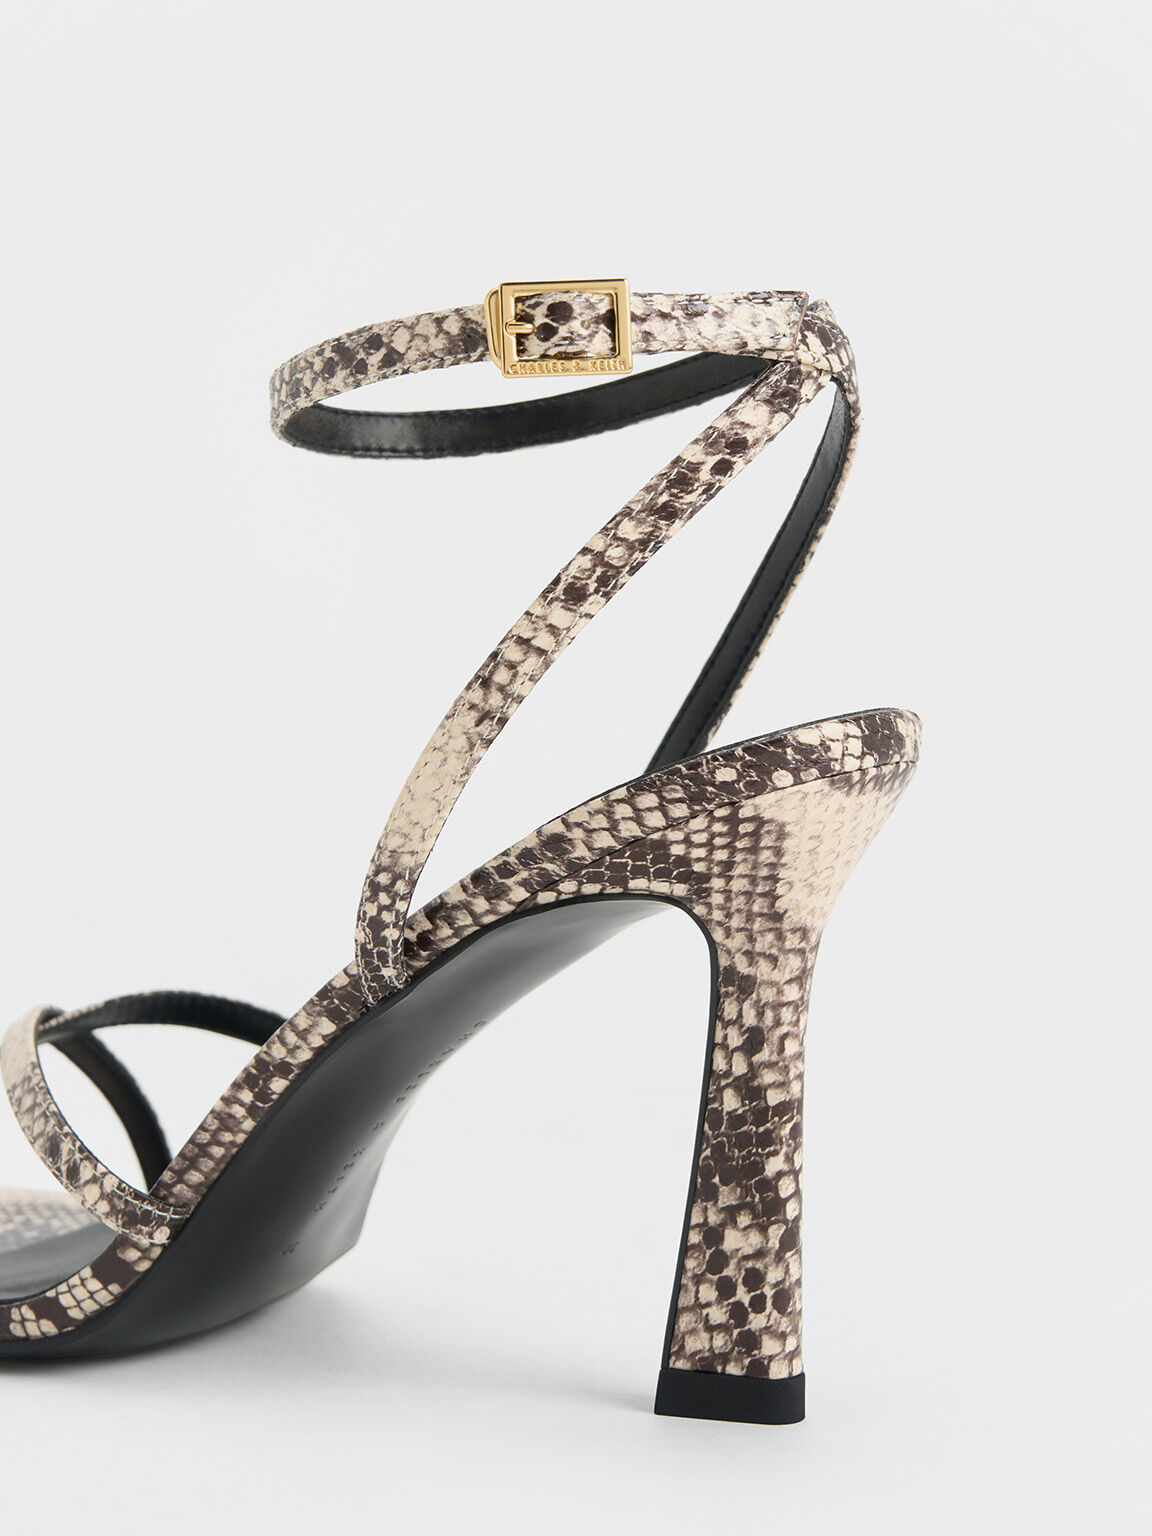 Leopard Print Block Ankle Strap Heels Sandals | Ankle strap sandals heels, Leopard  print sandals, Shoes women heels